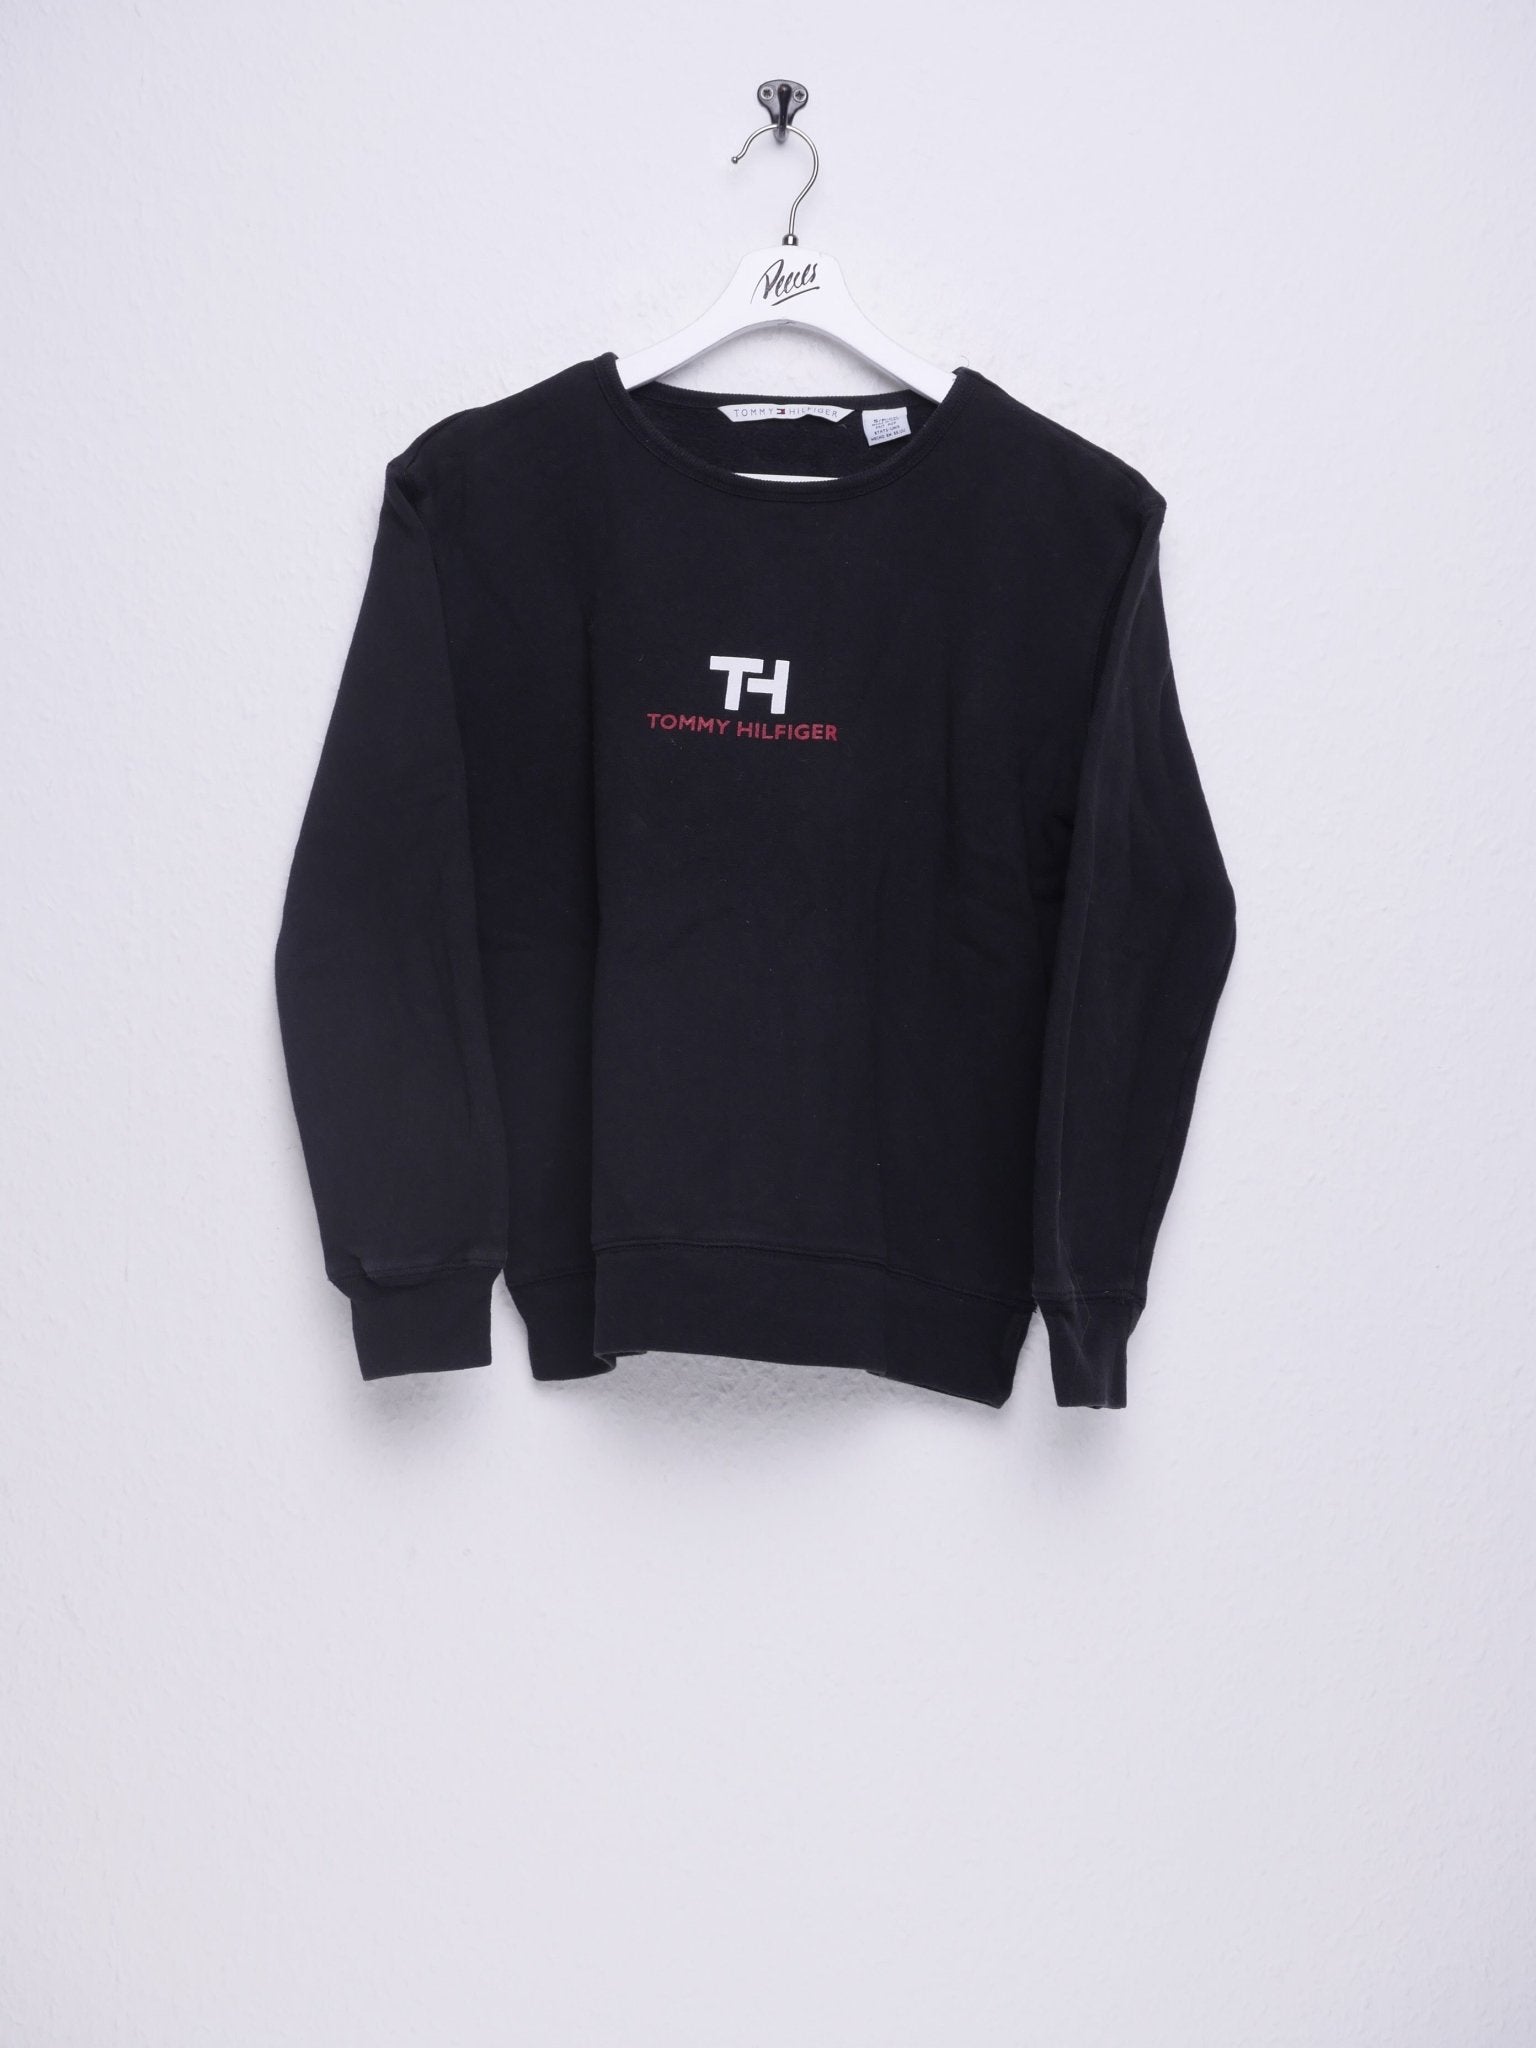 Tommy Hilfiger printed Logo black Sweater - Peeces